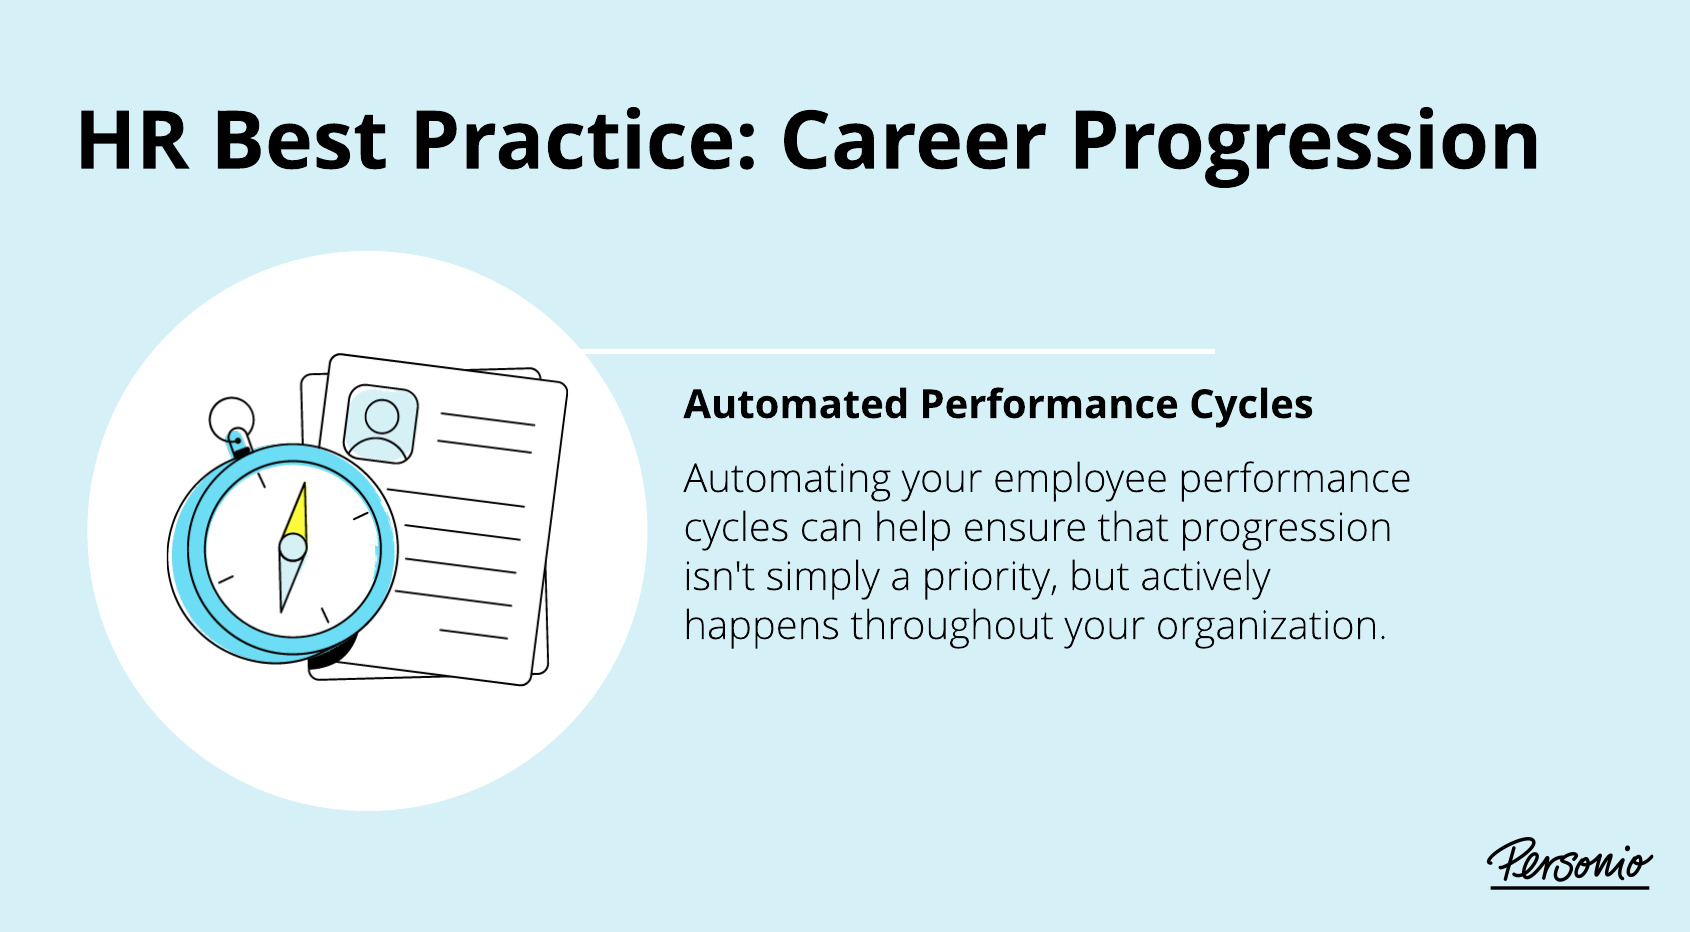 career progression best practice